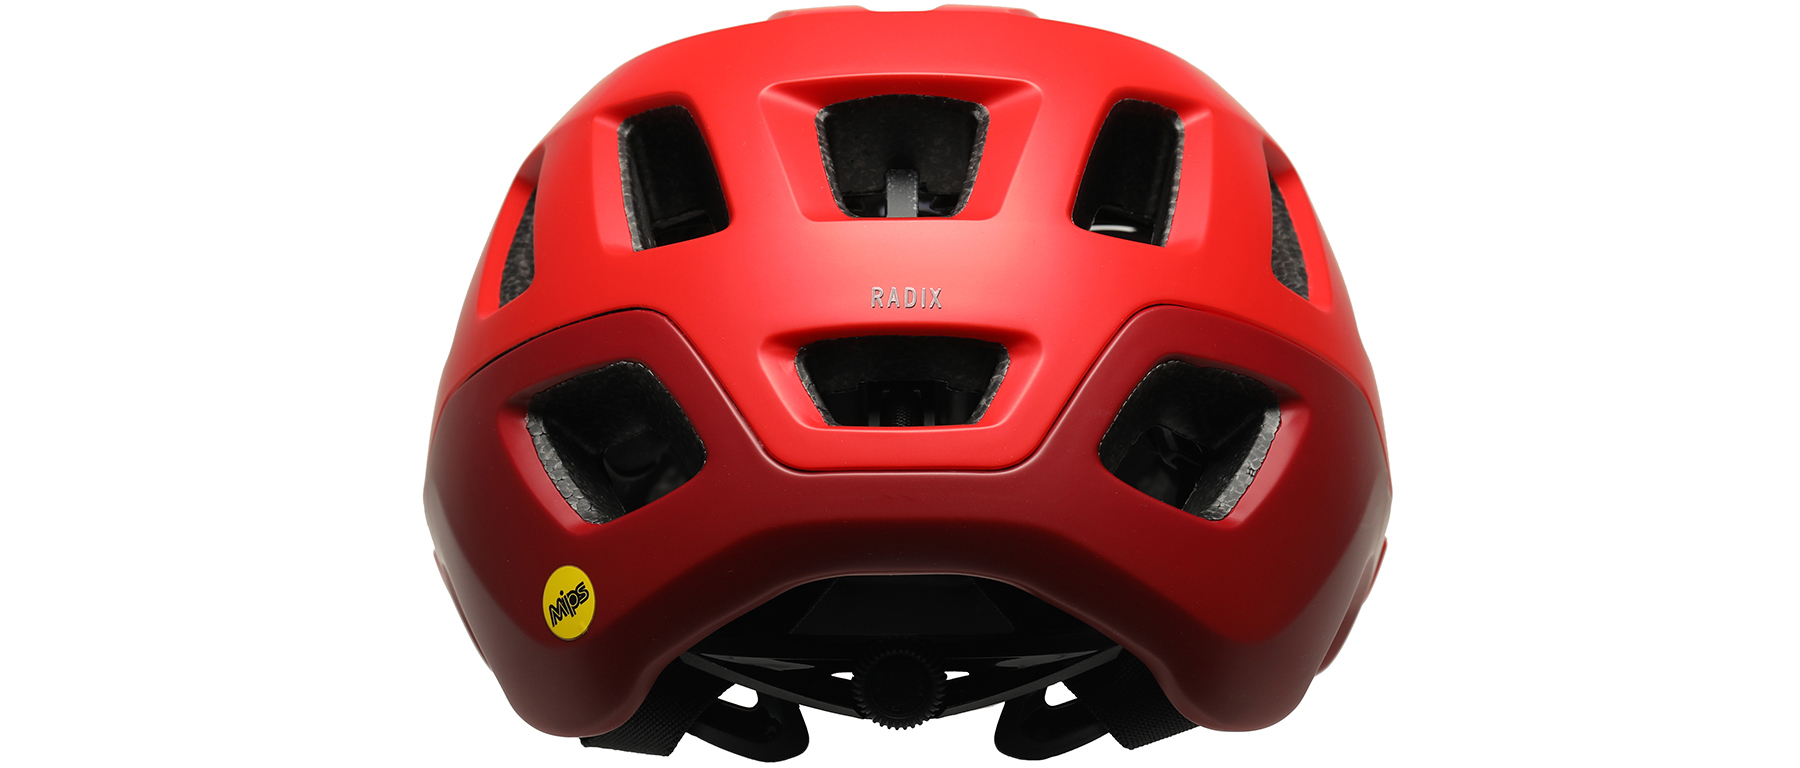 Giro Radix MIPS Helmet